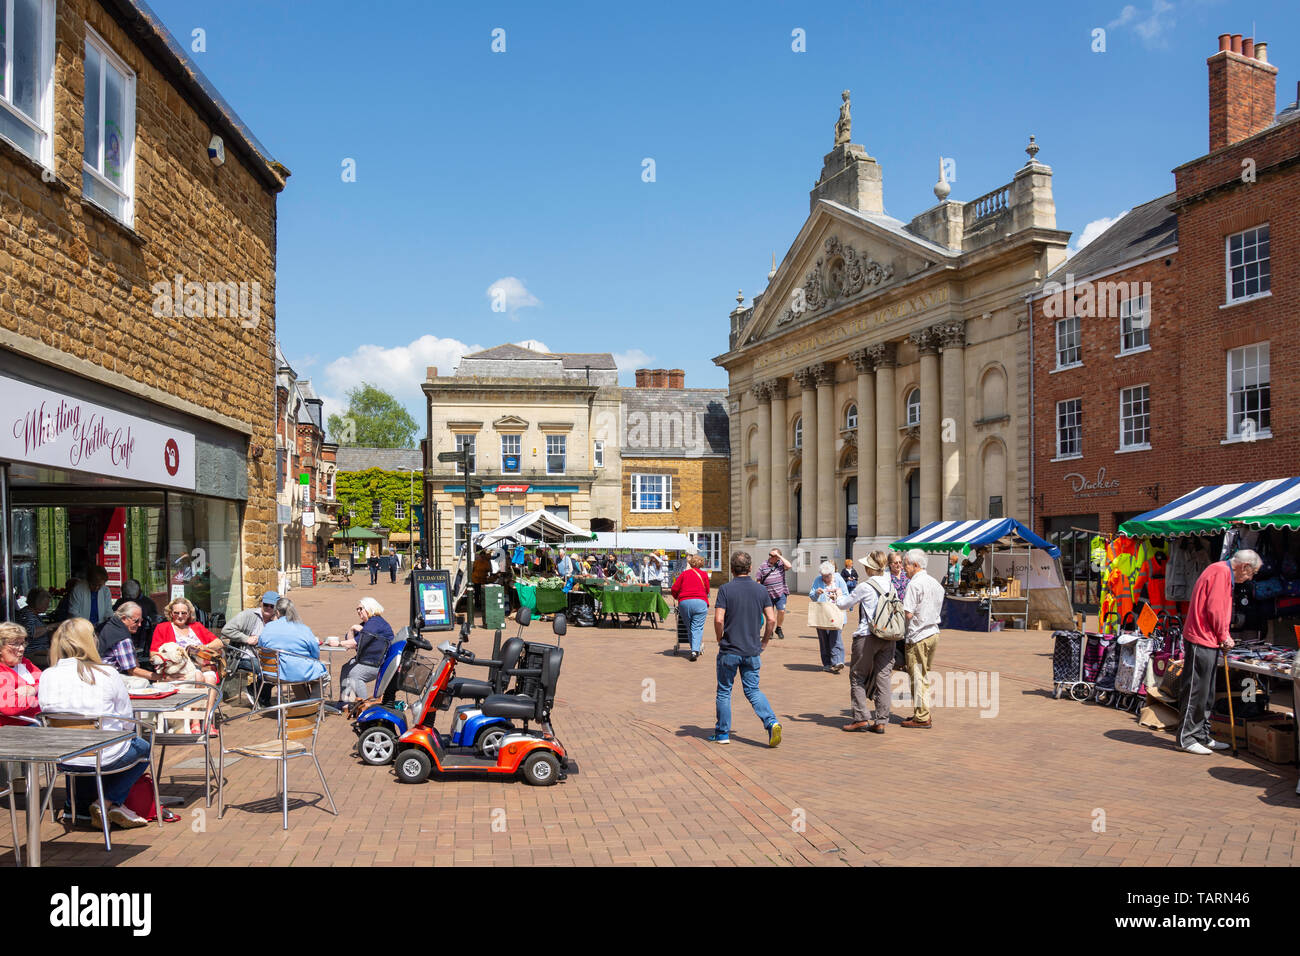 Farmer's Market in Market Place, Banbury, Oxfordshire, England, United Kingdom Stock Photo